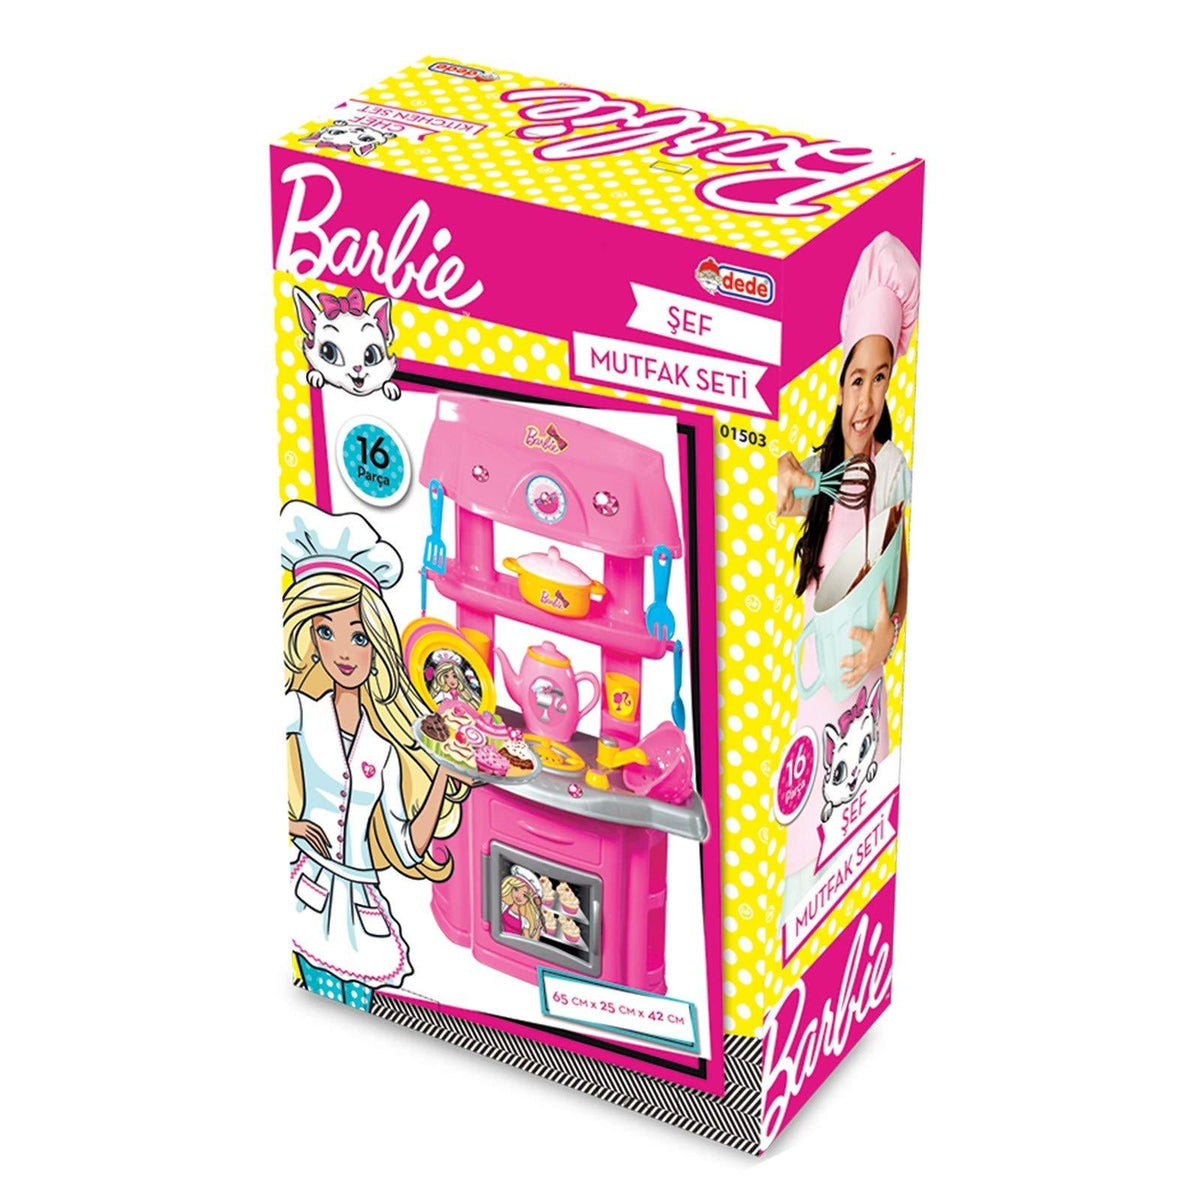 DeDe Barbie Chef Kitchen Set-01503